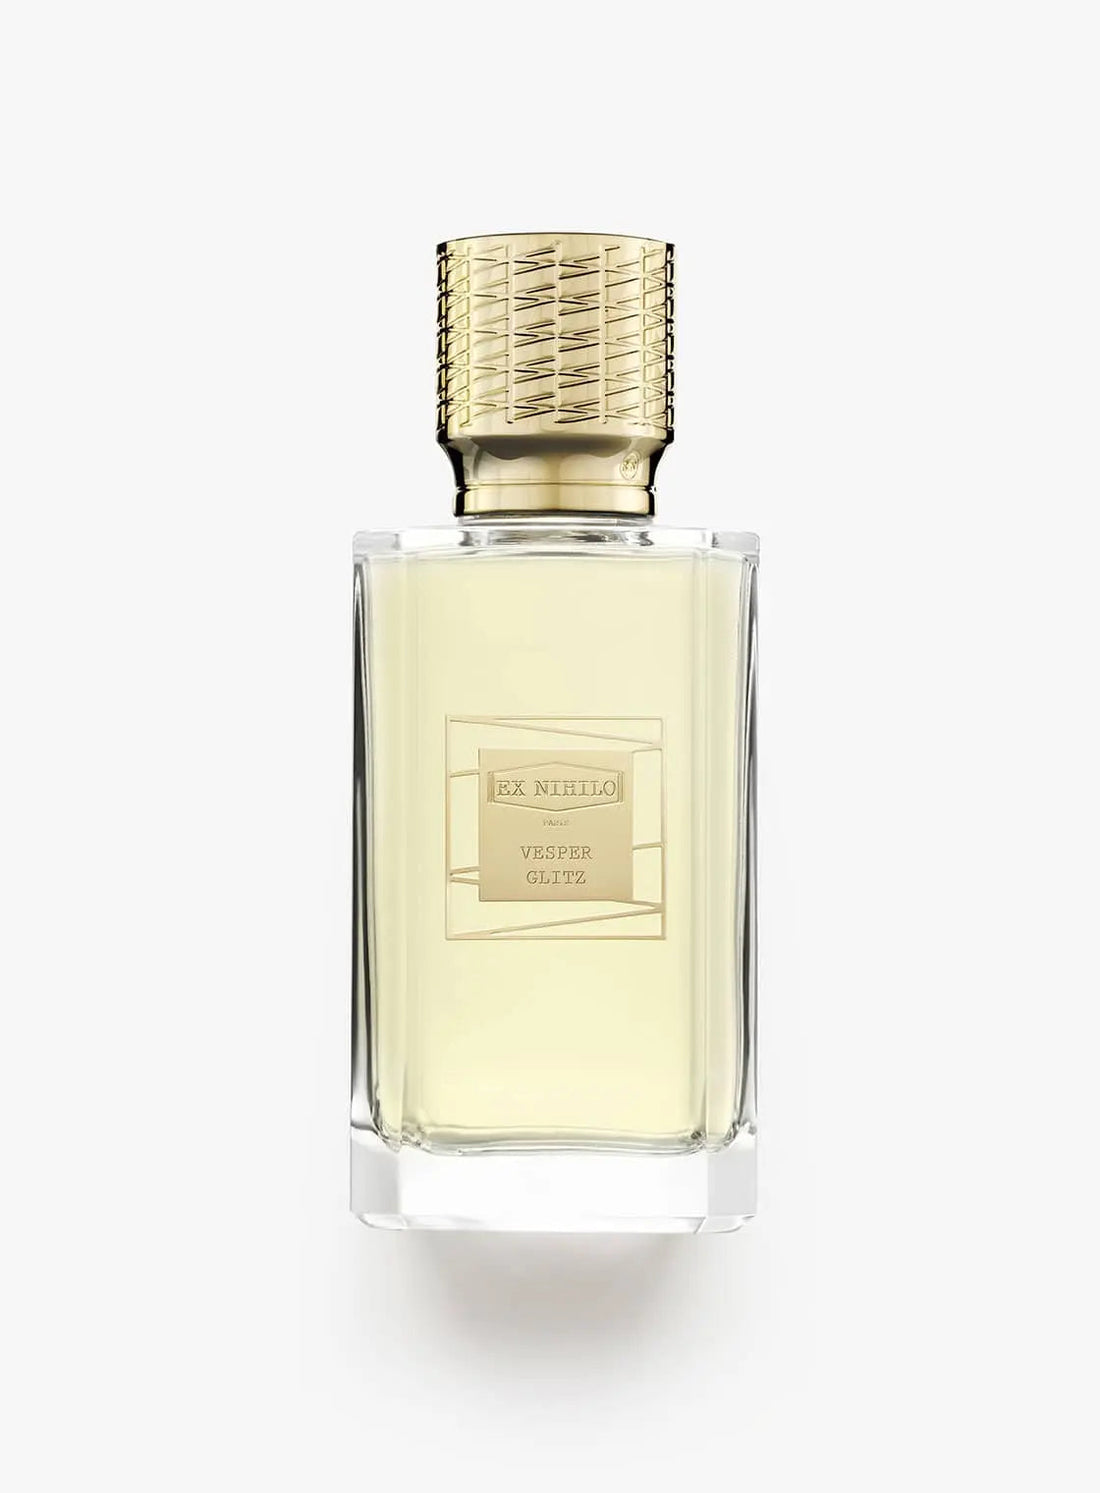 Ex nihilo Vesper Glitz eau de parfum - 50 ml